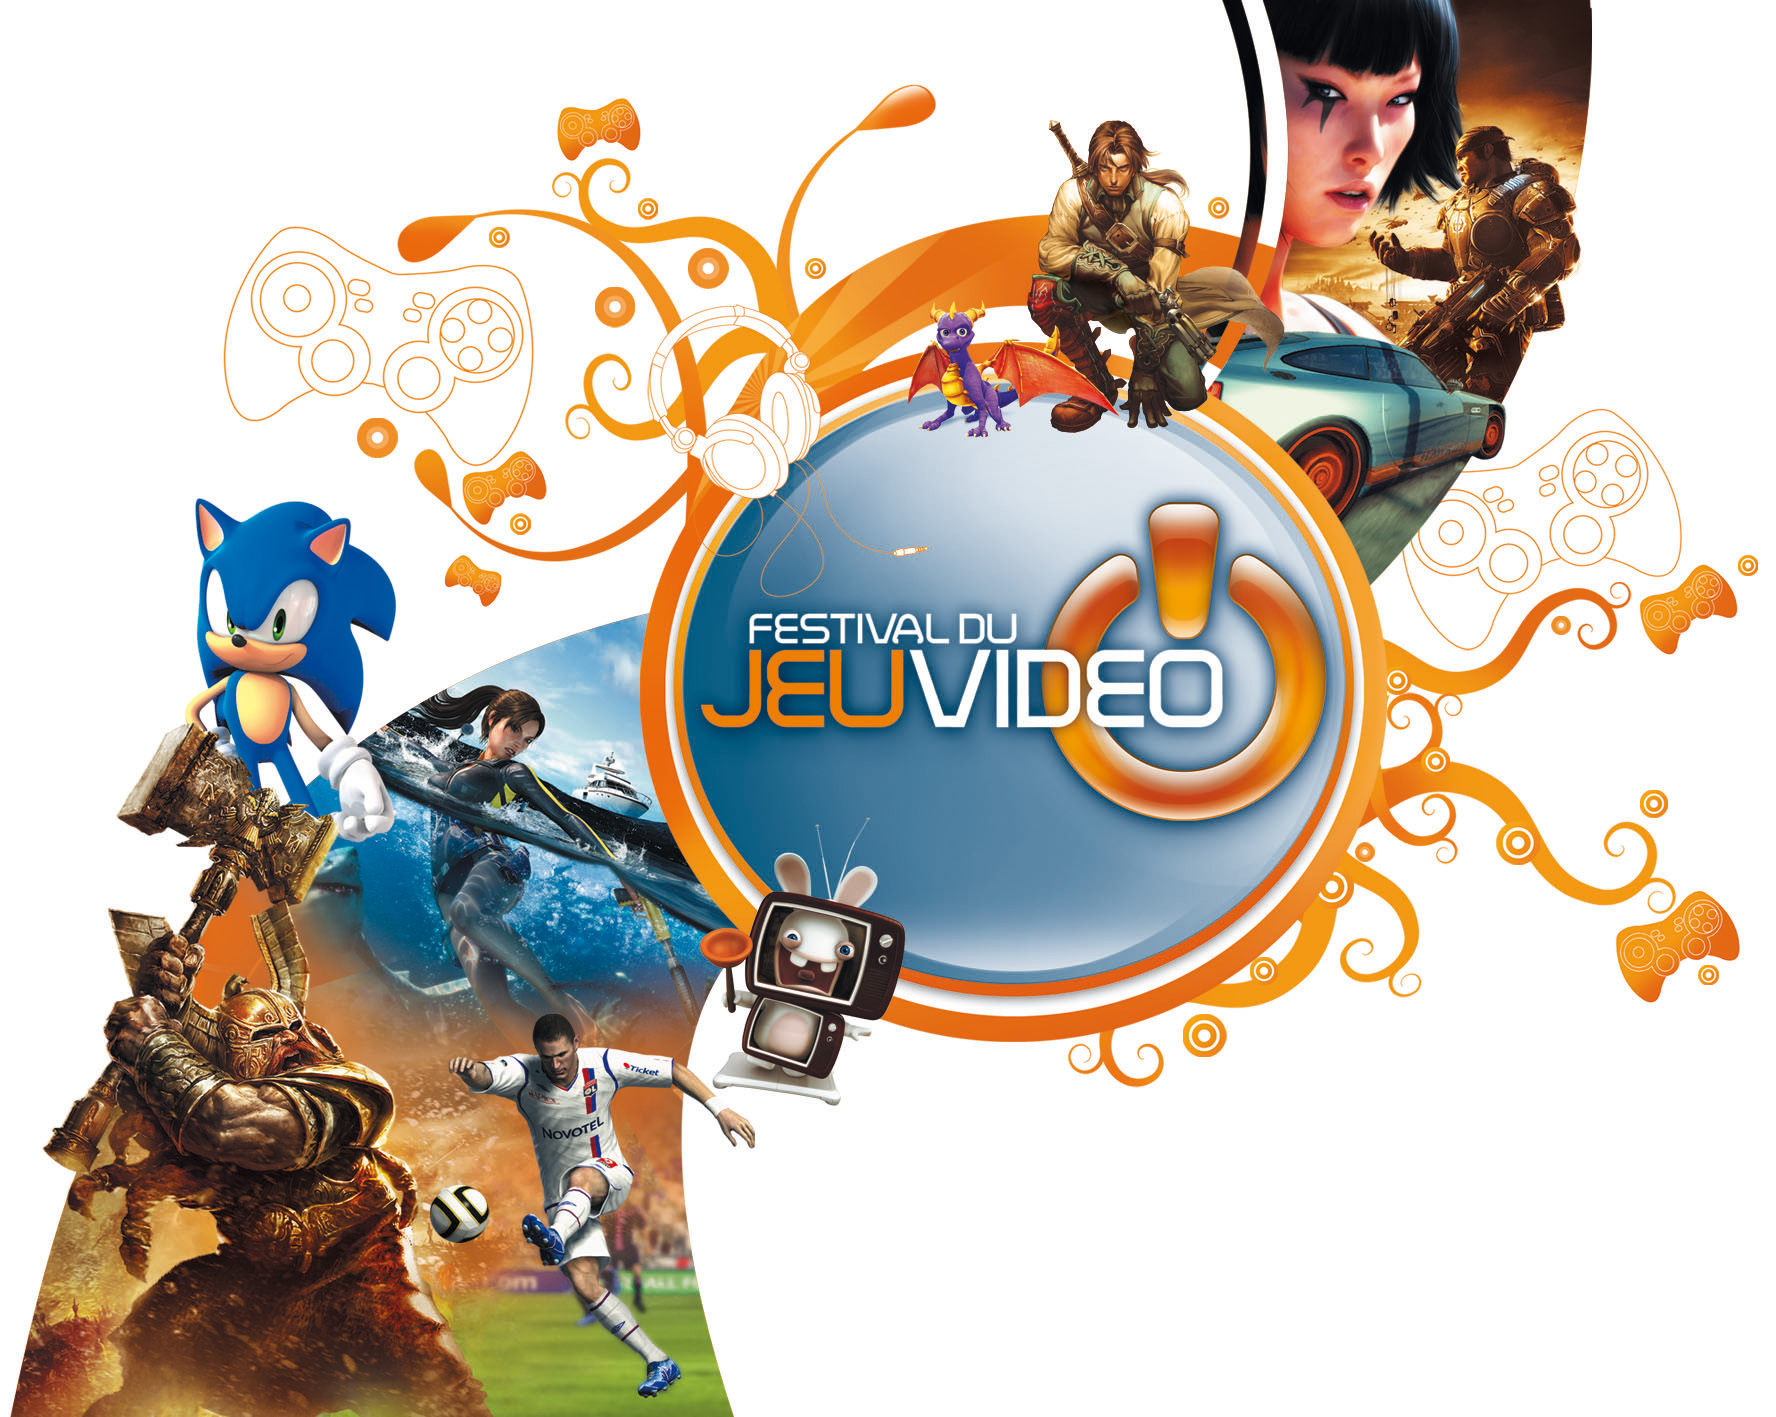 festival du jeu video 2008